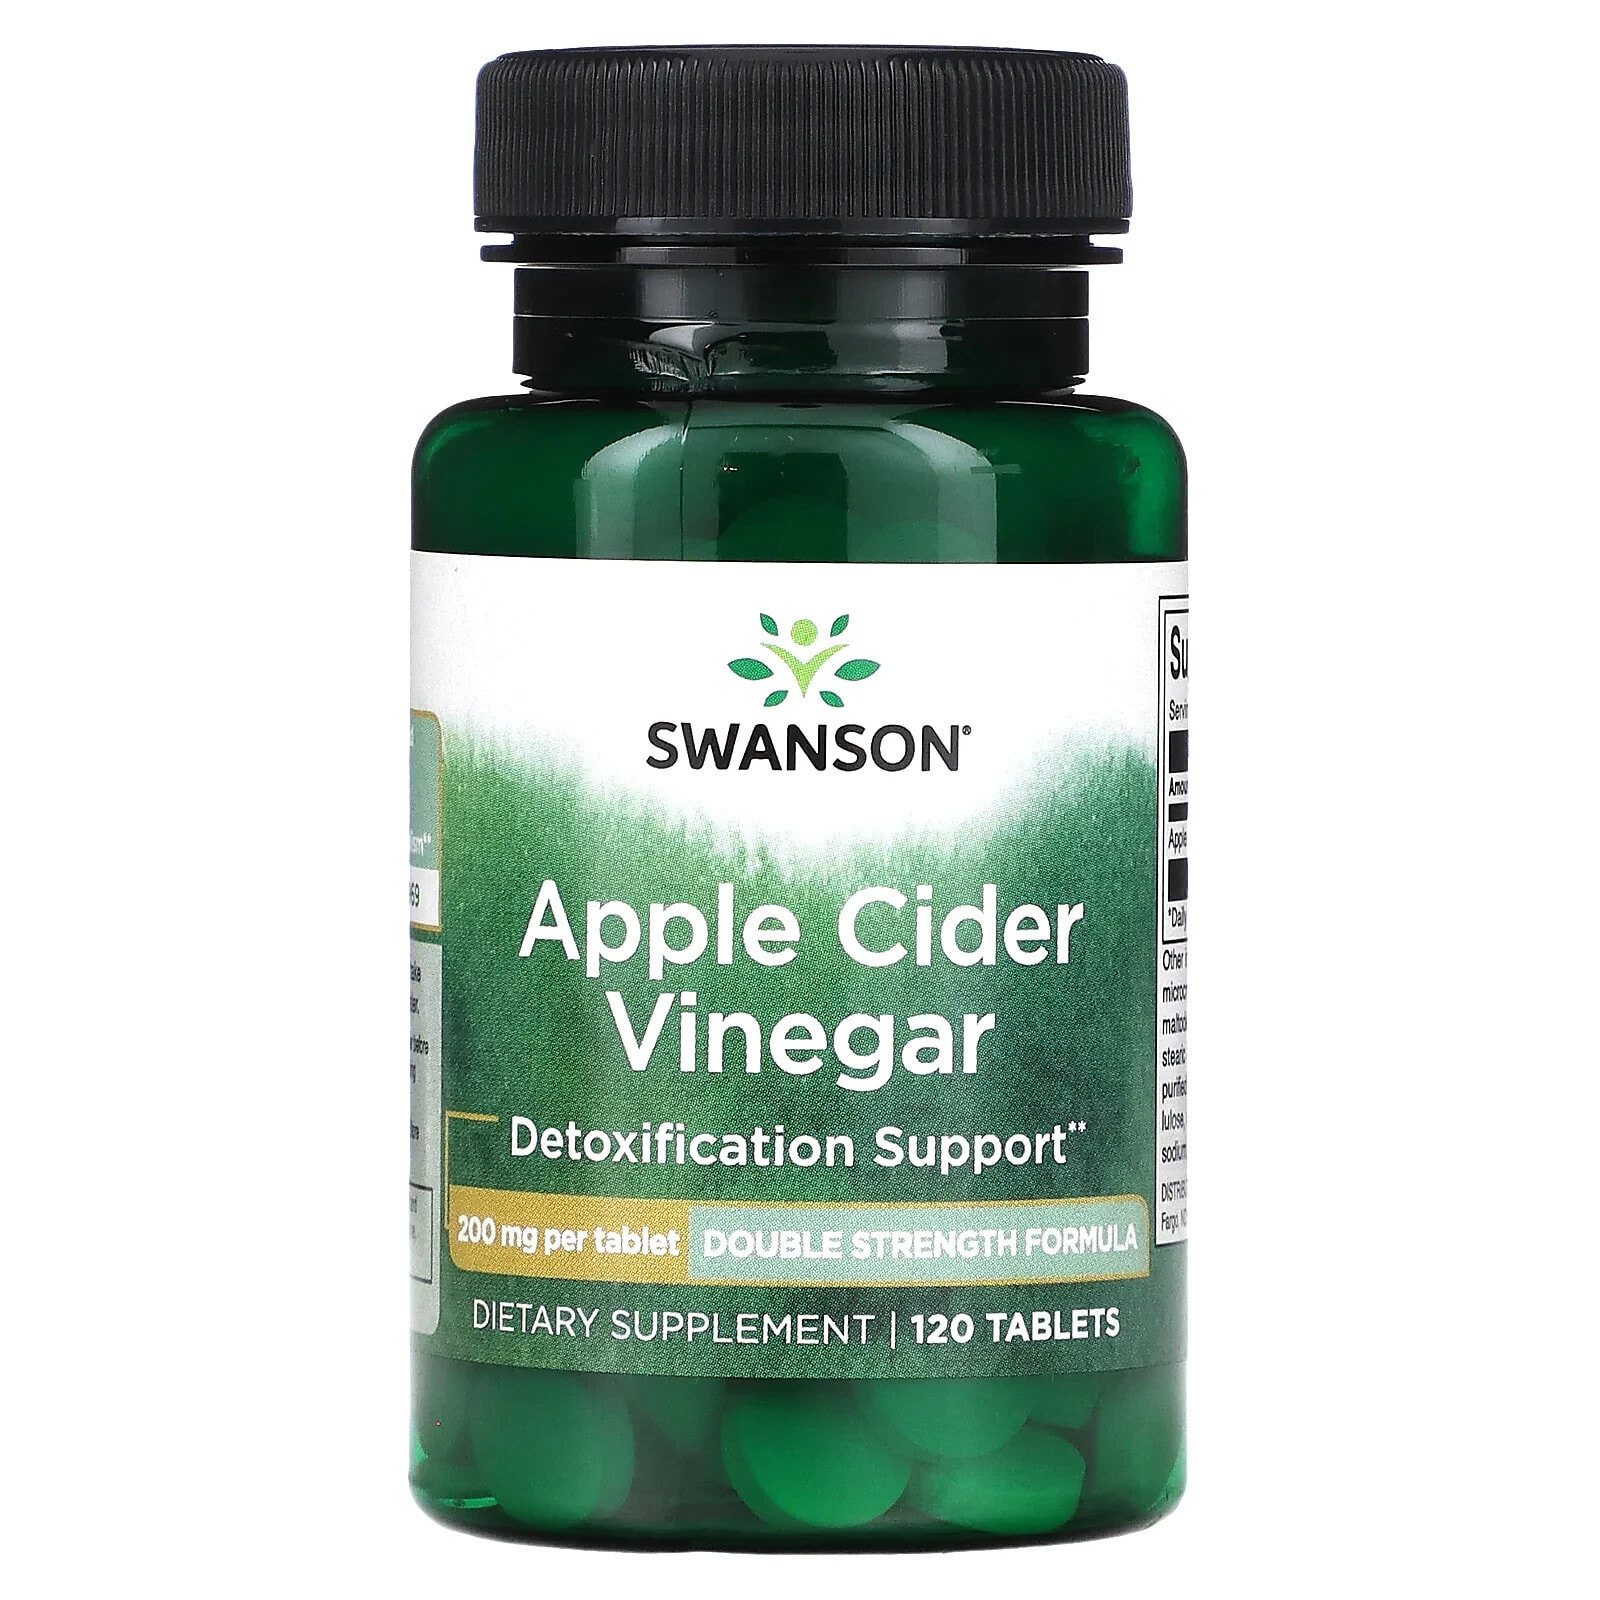 Swanson, Apple Cider Vinegar, 200 mg , 30 Tablets